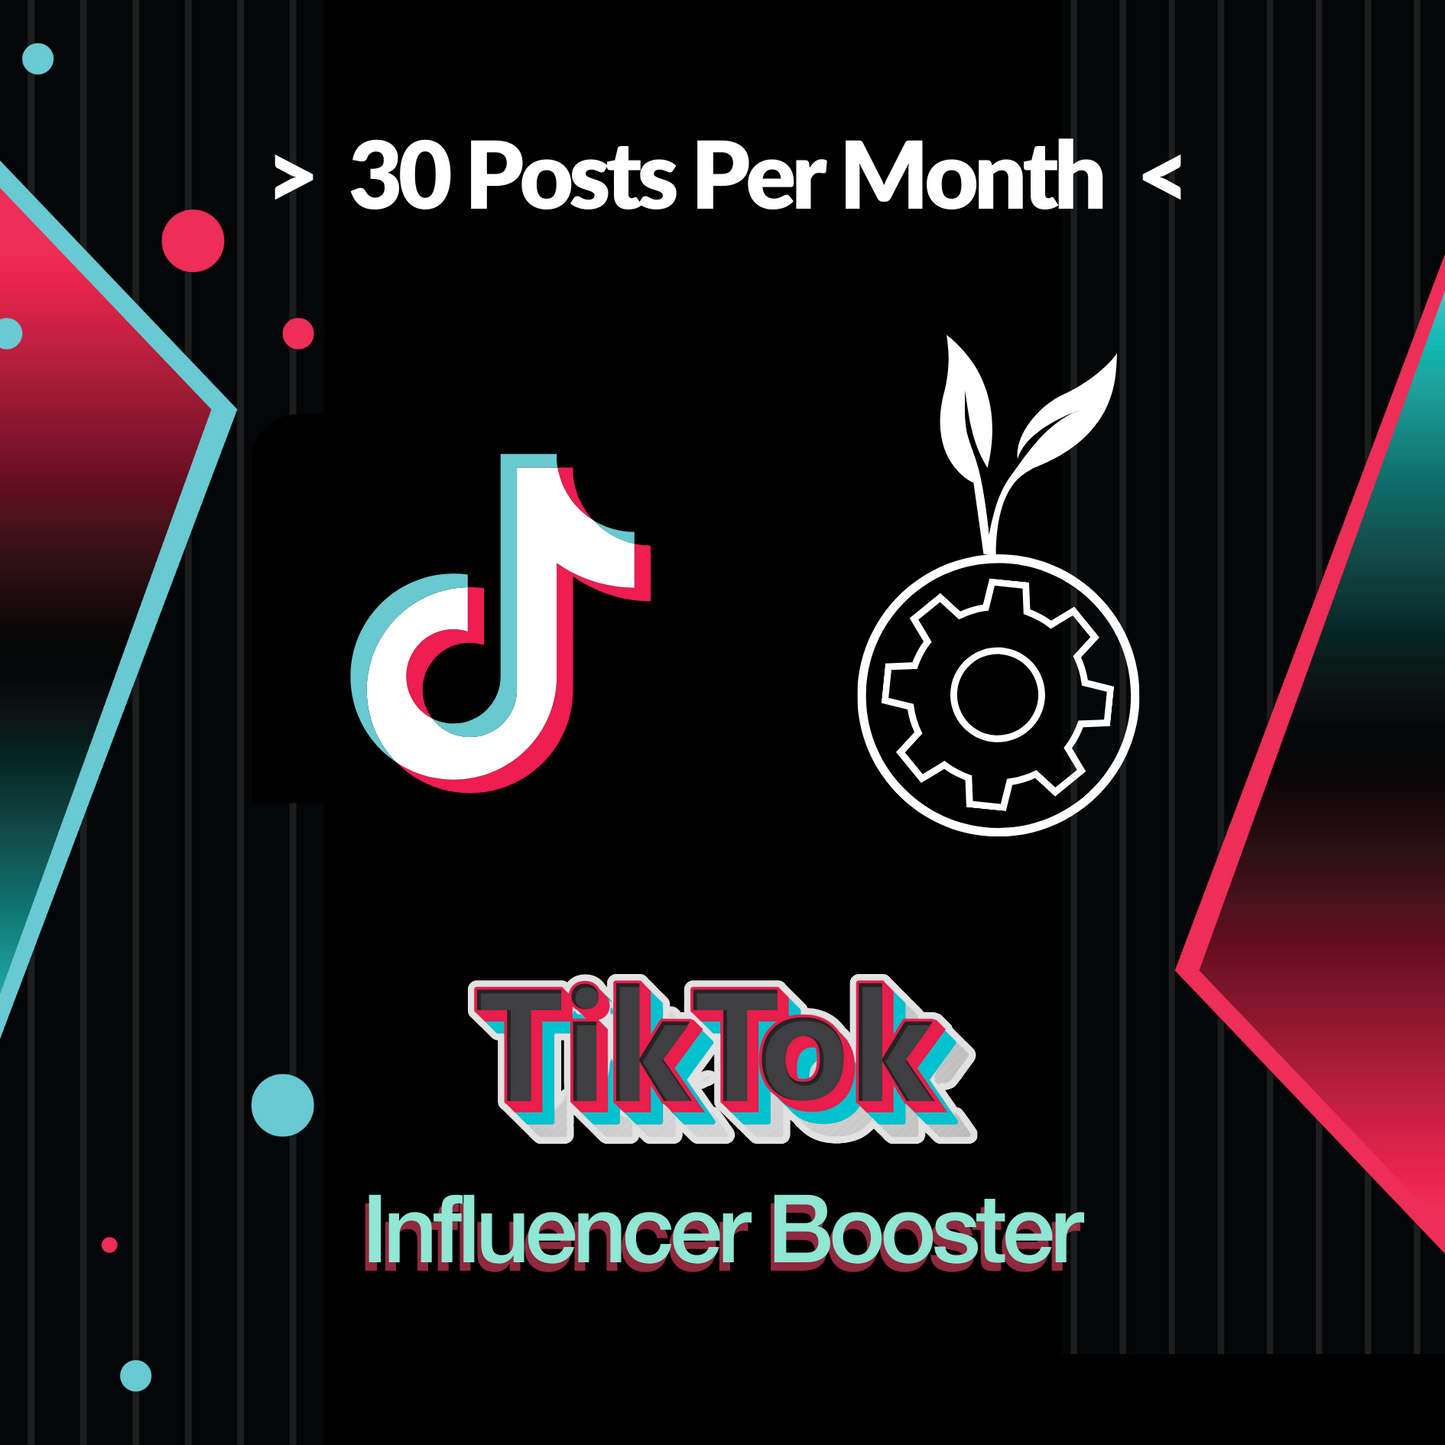 TikTok Influencer Booster | 30 Posts Per Month